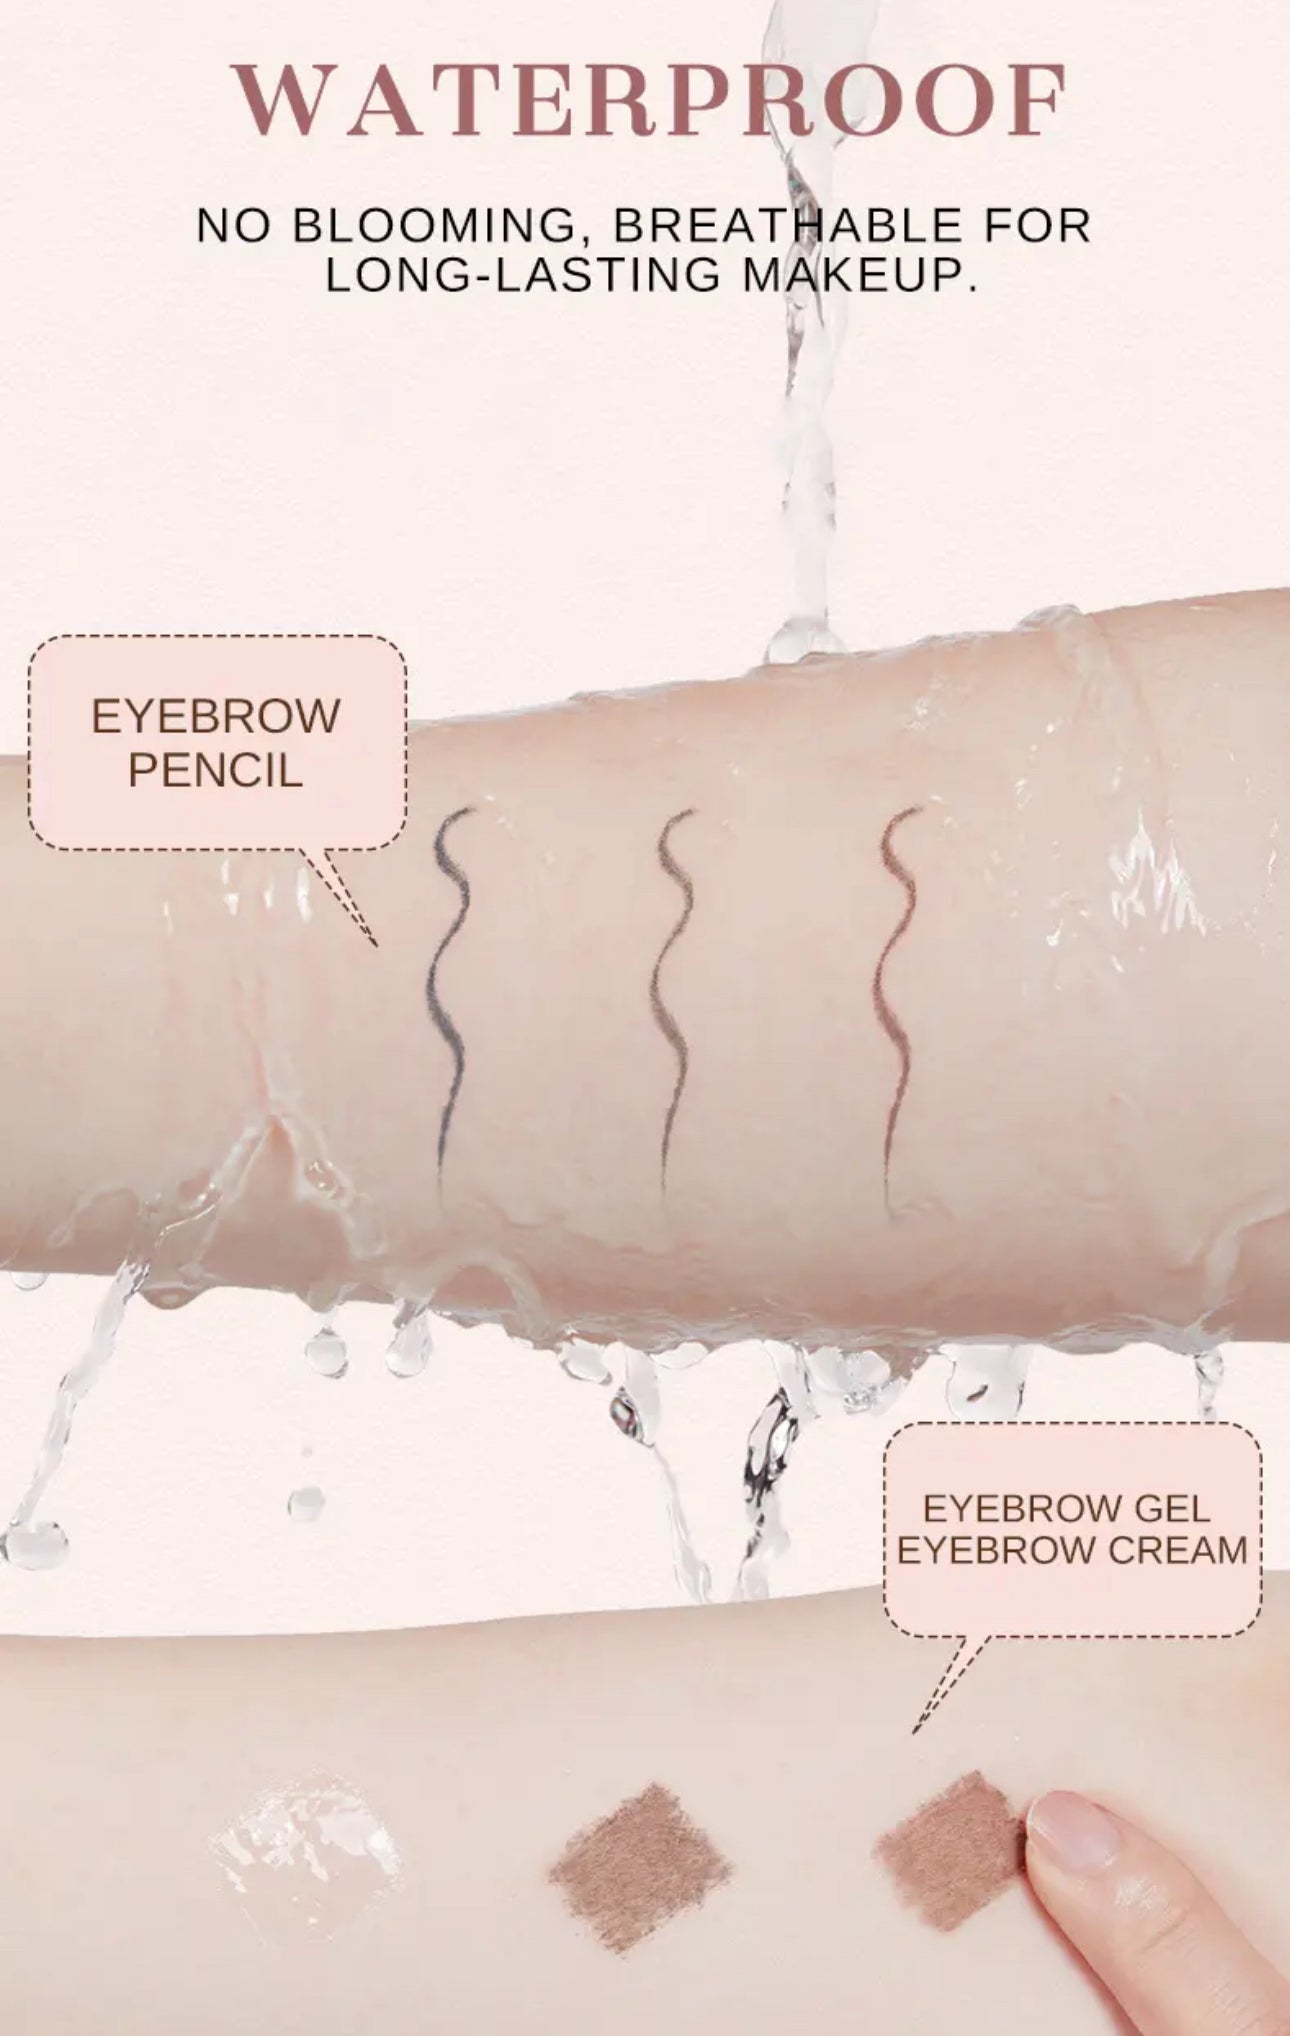 Waterproof eyebrow pencil